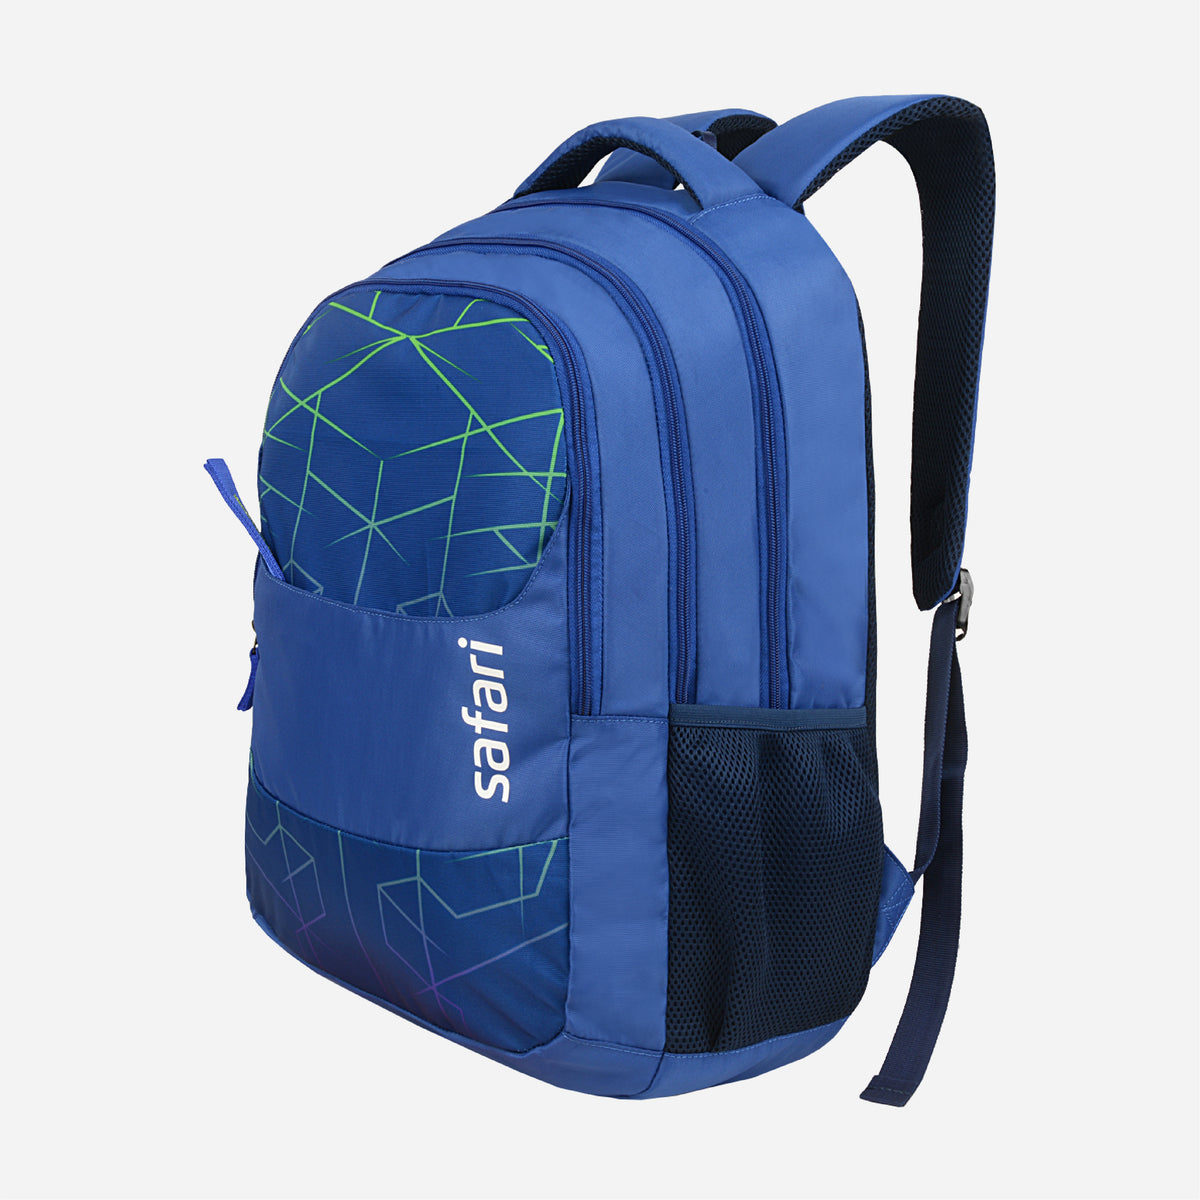 Hi-Tech School Backpack - Blue